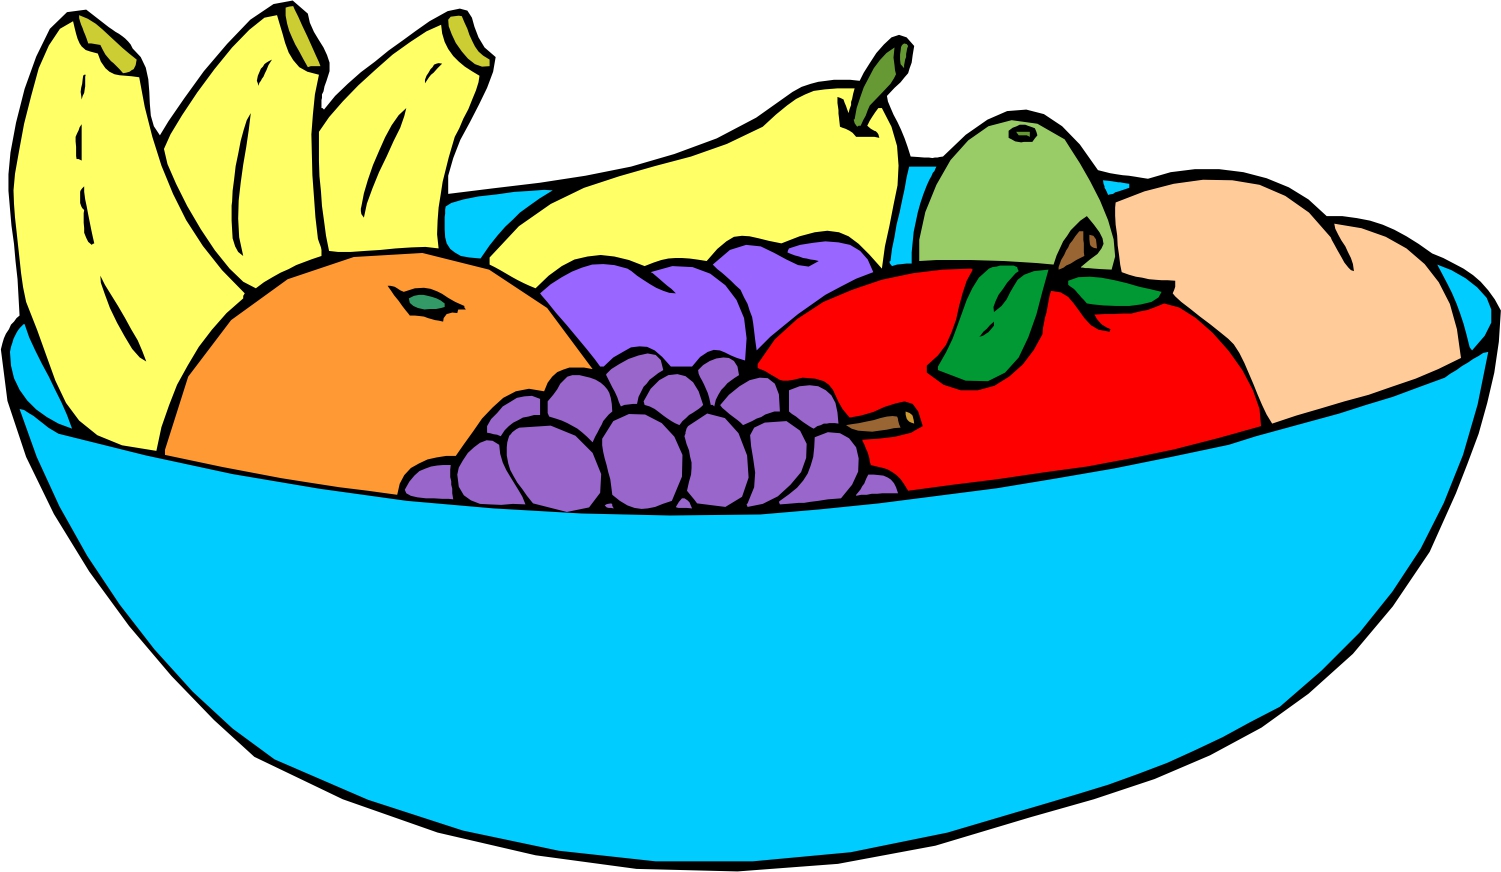 Drawing - Fruit Bowl. Fotosea